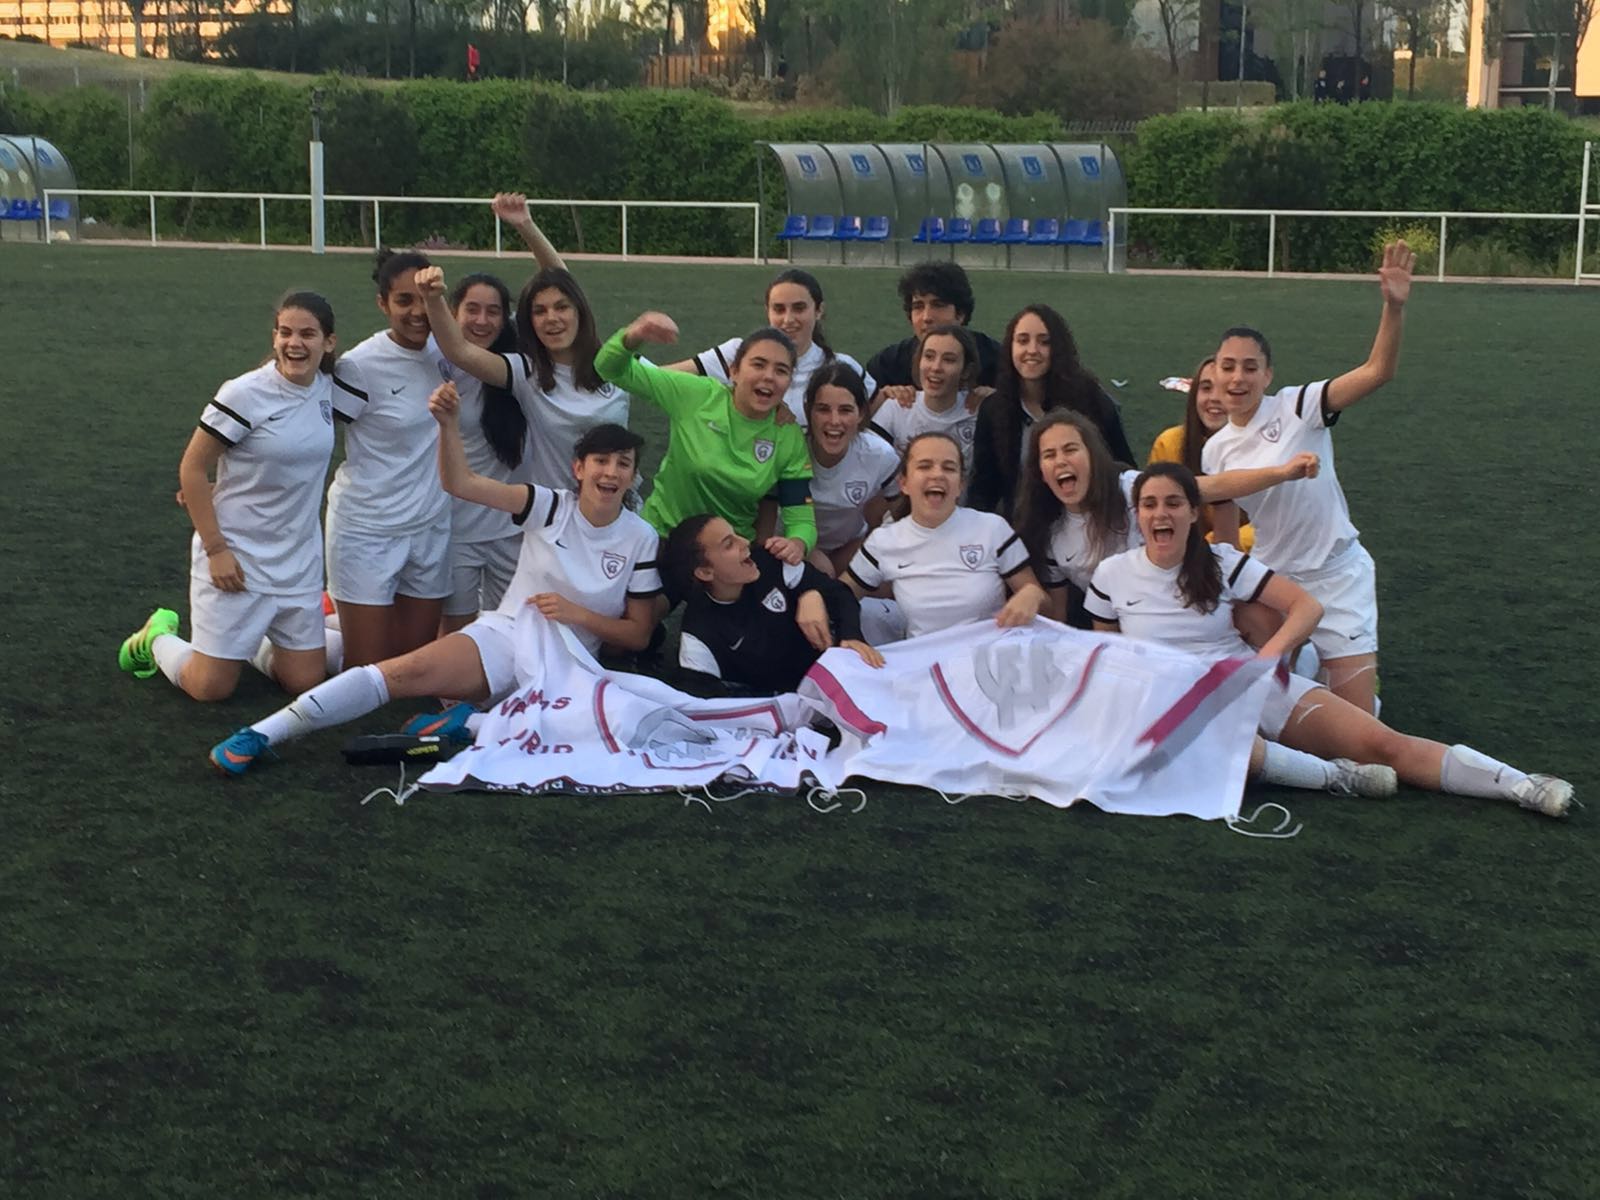 Equipo femenino infantil se consagra campeón en liga de España tras golear a todos sus rivales masculinos